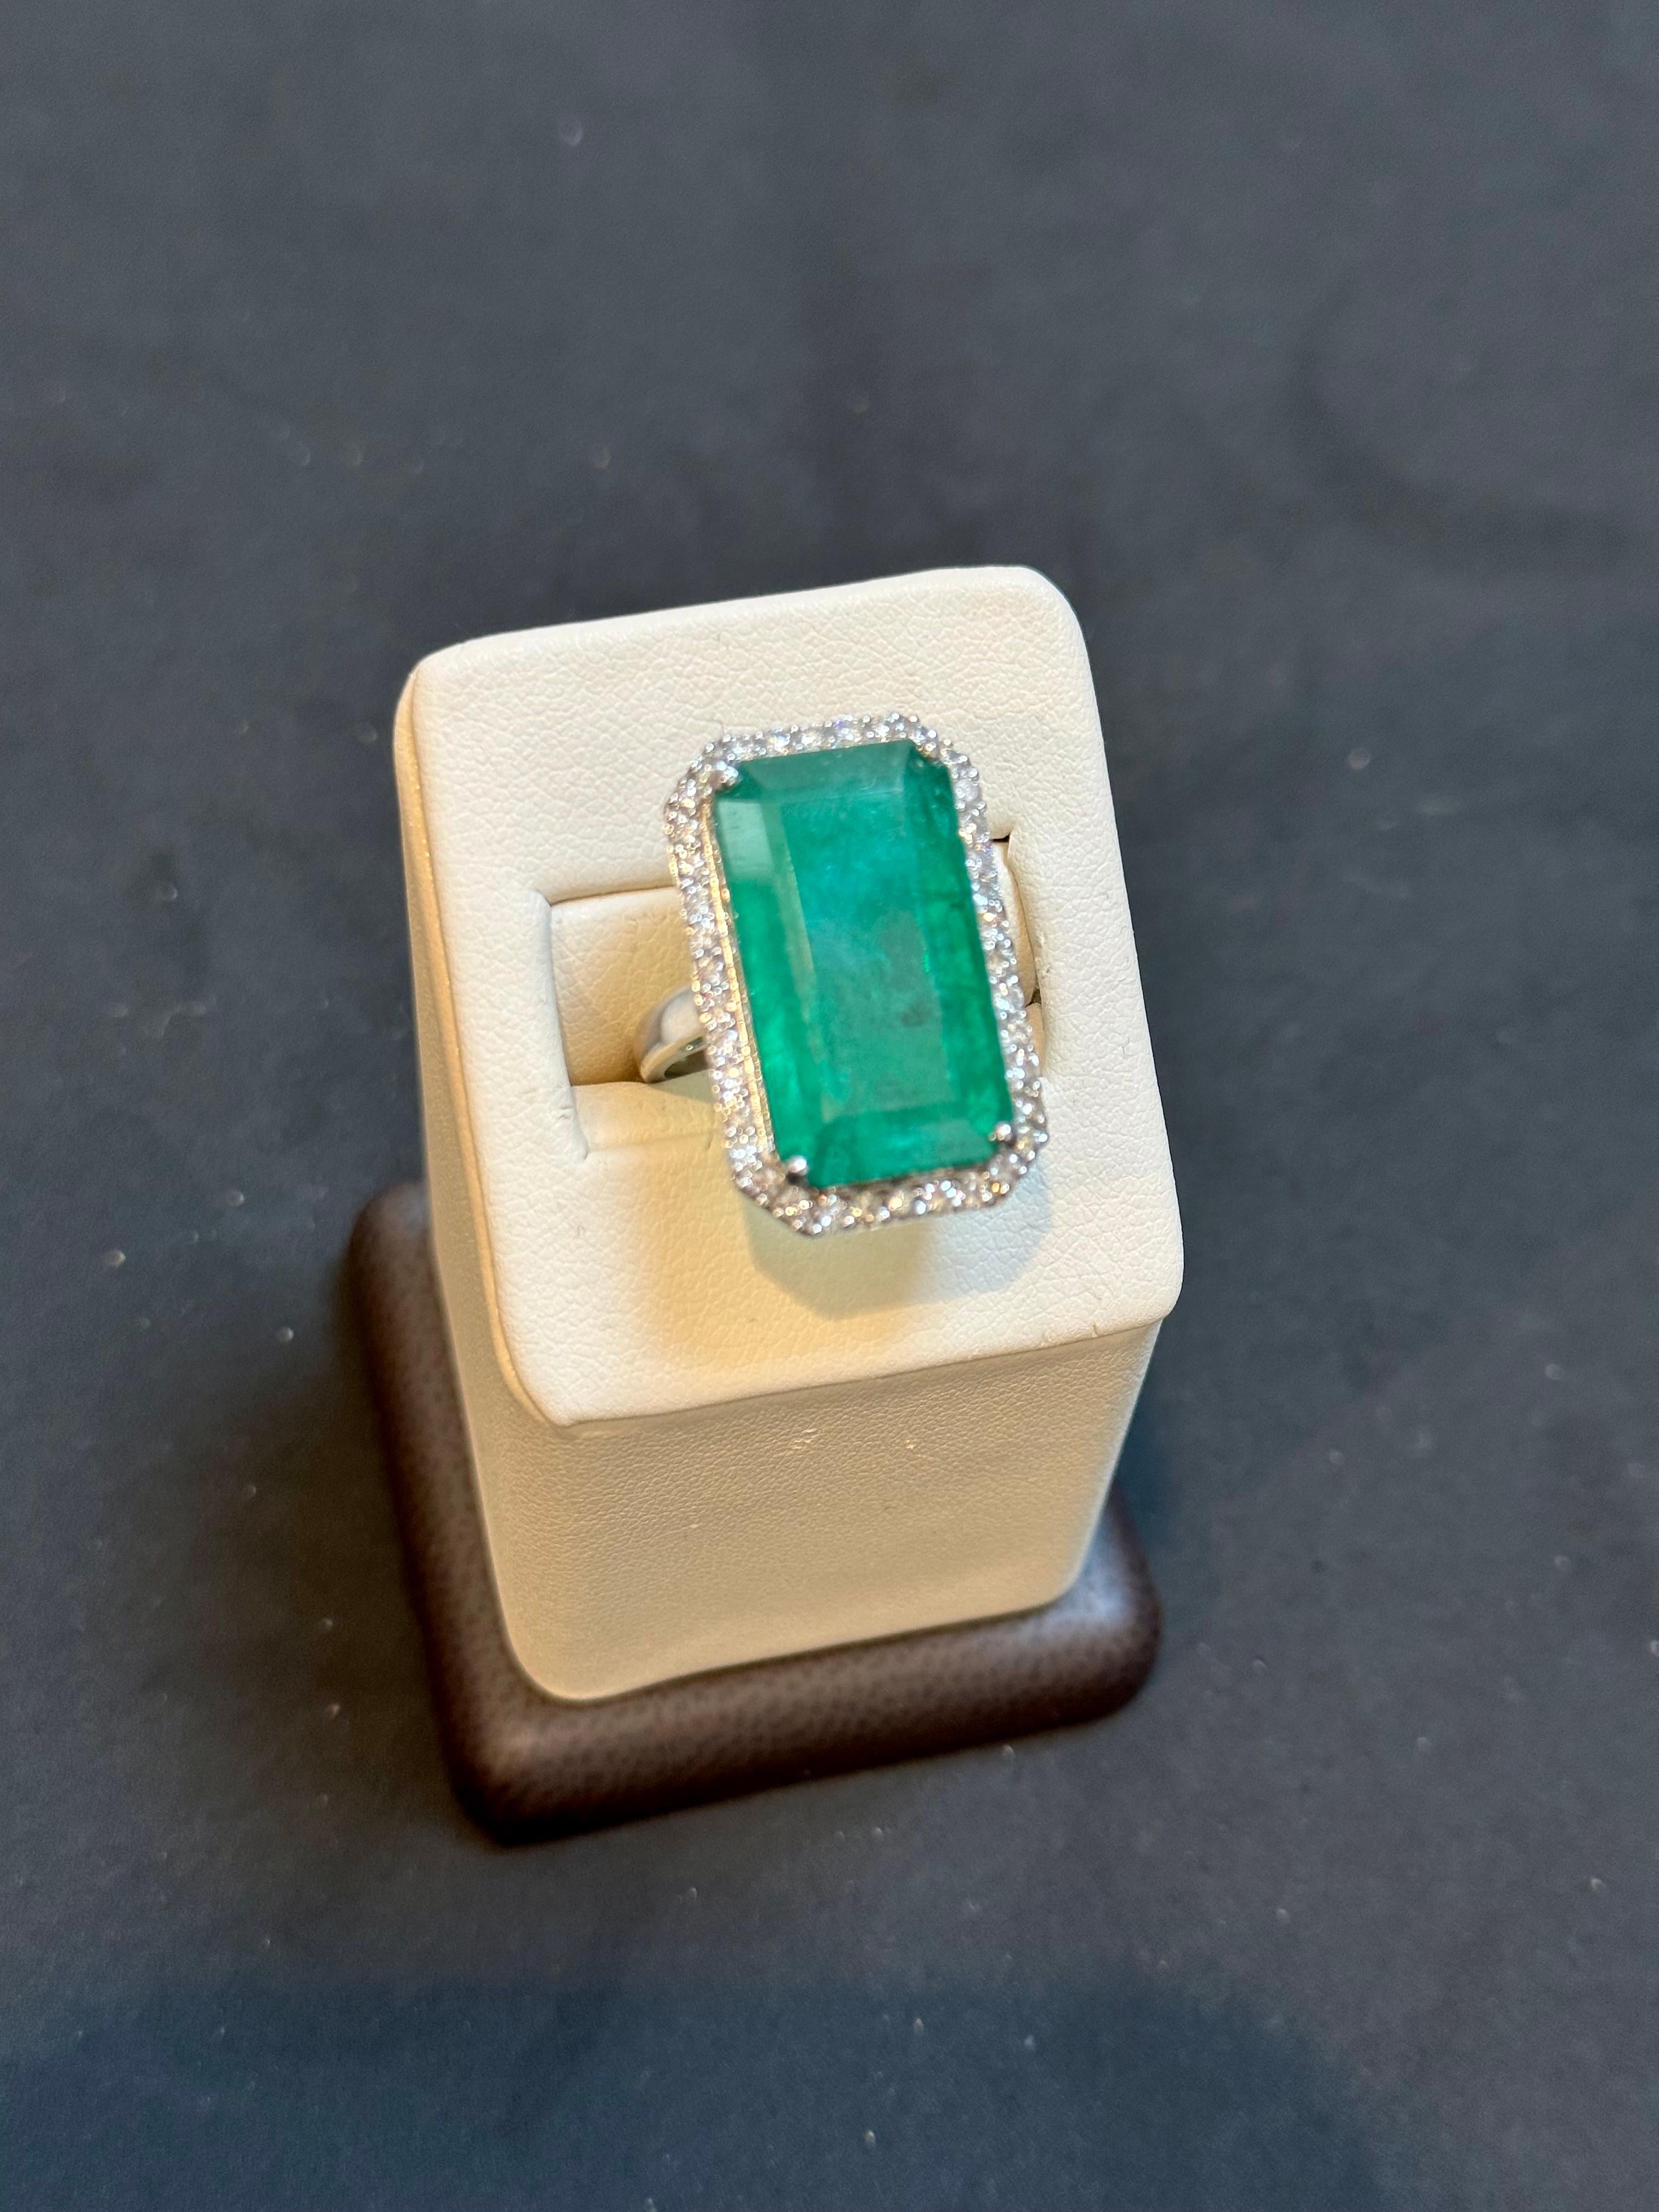 Natural 16 Carat Emerald Cut Zambian Emerald & Diamond Ring in 14kt White Gold For Sale 3